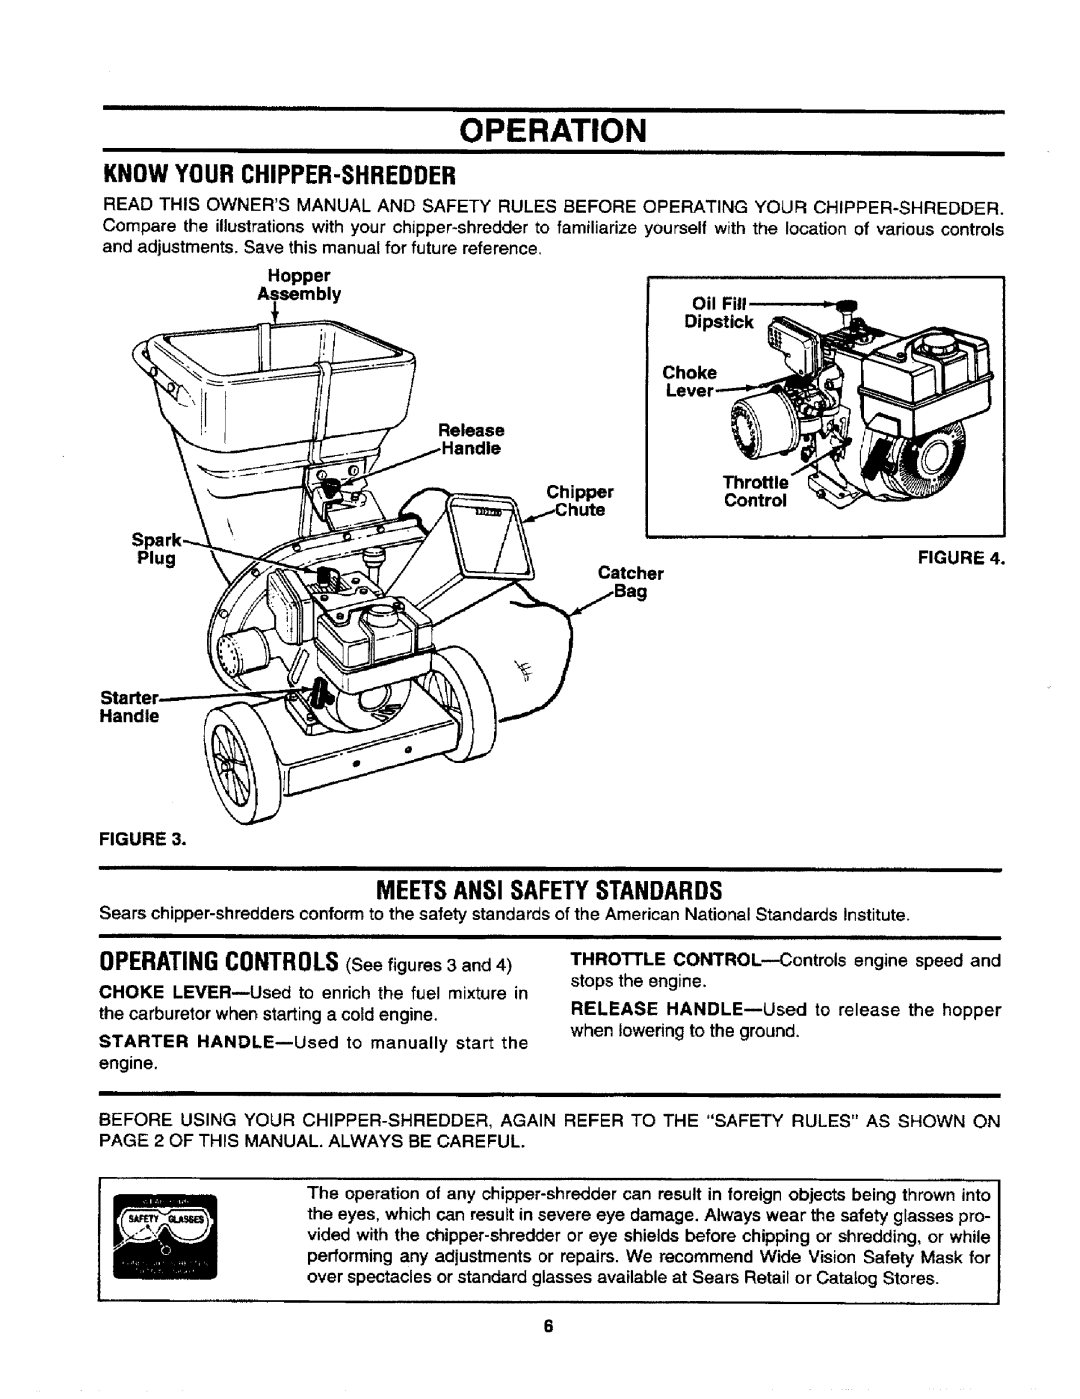 Craftsman 247.795940 manual Operation, Know Your Chipper-Shredder, Meets Ansi Safetystandards 